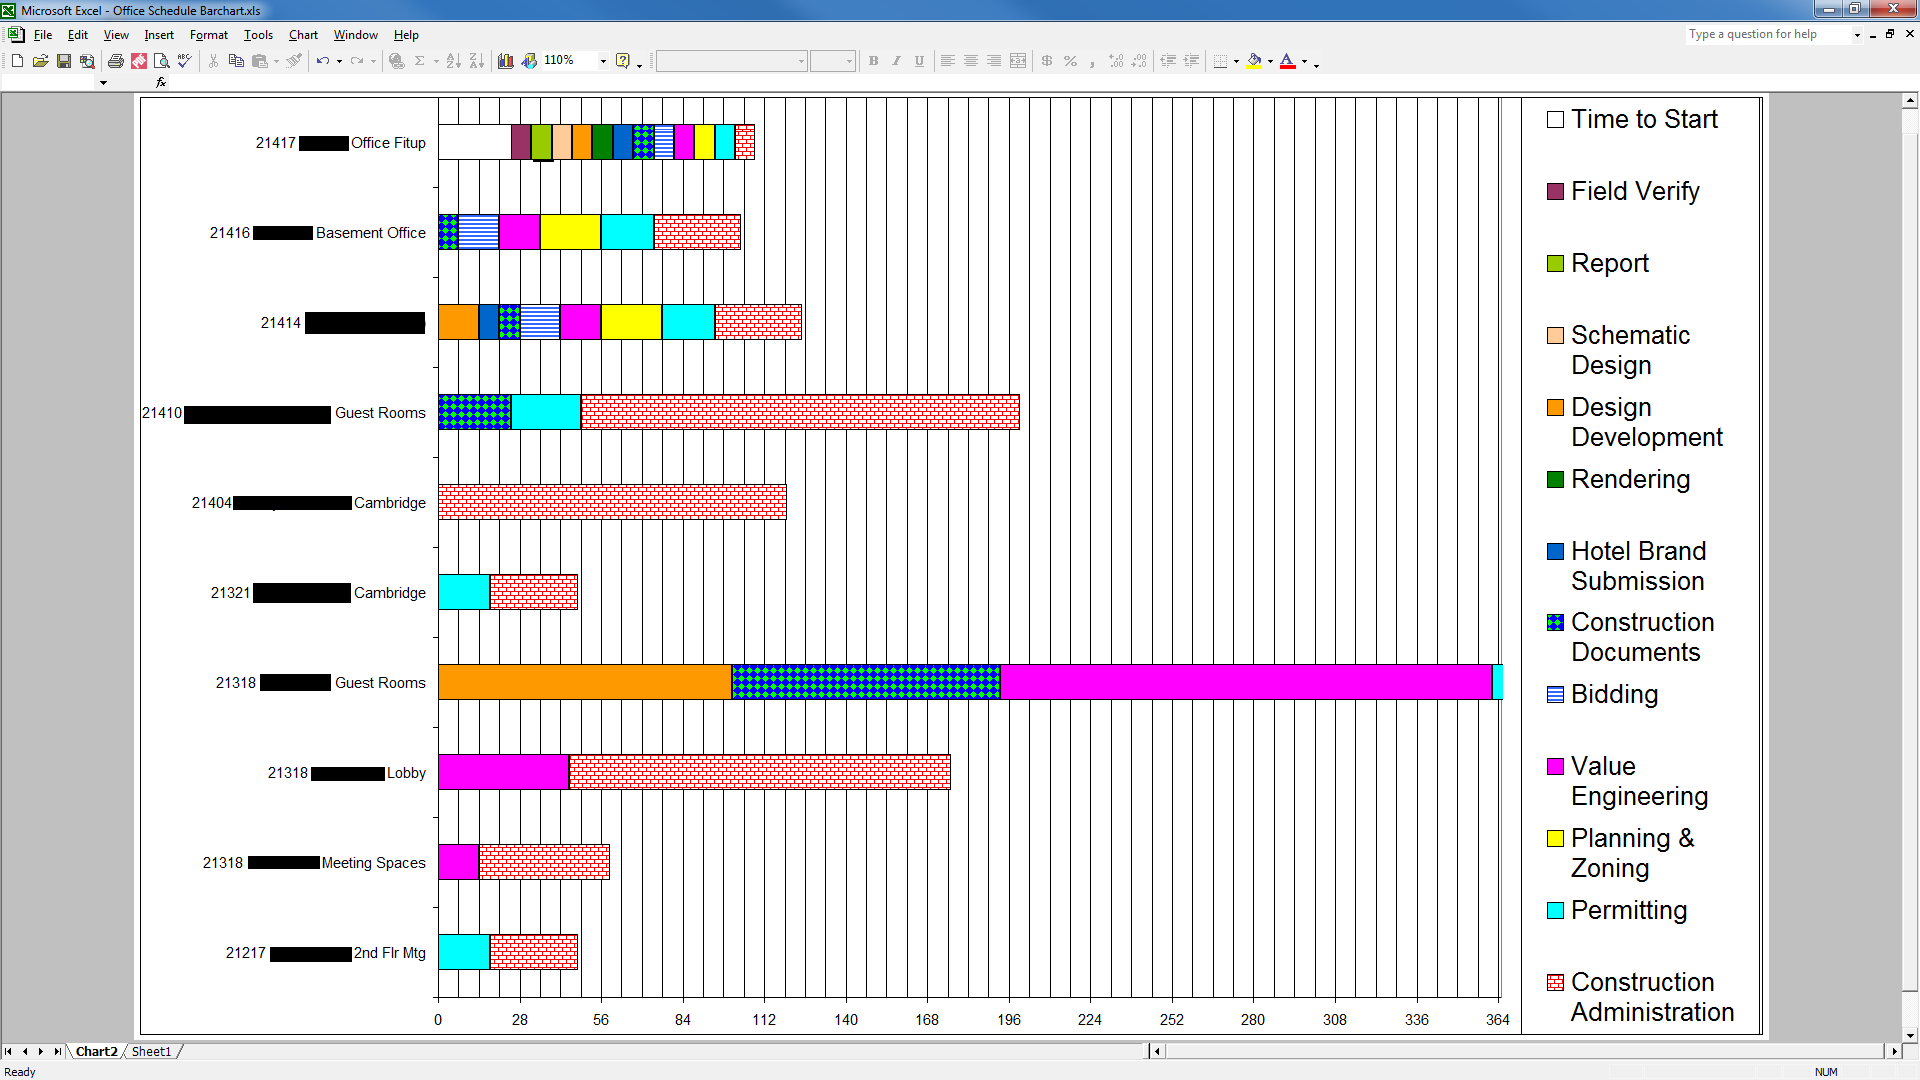 Multi Project Gantt Chart Excel